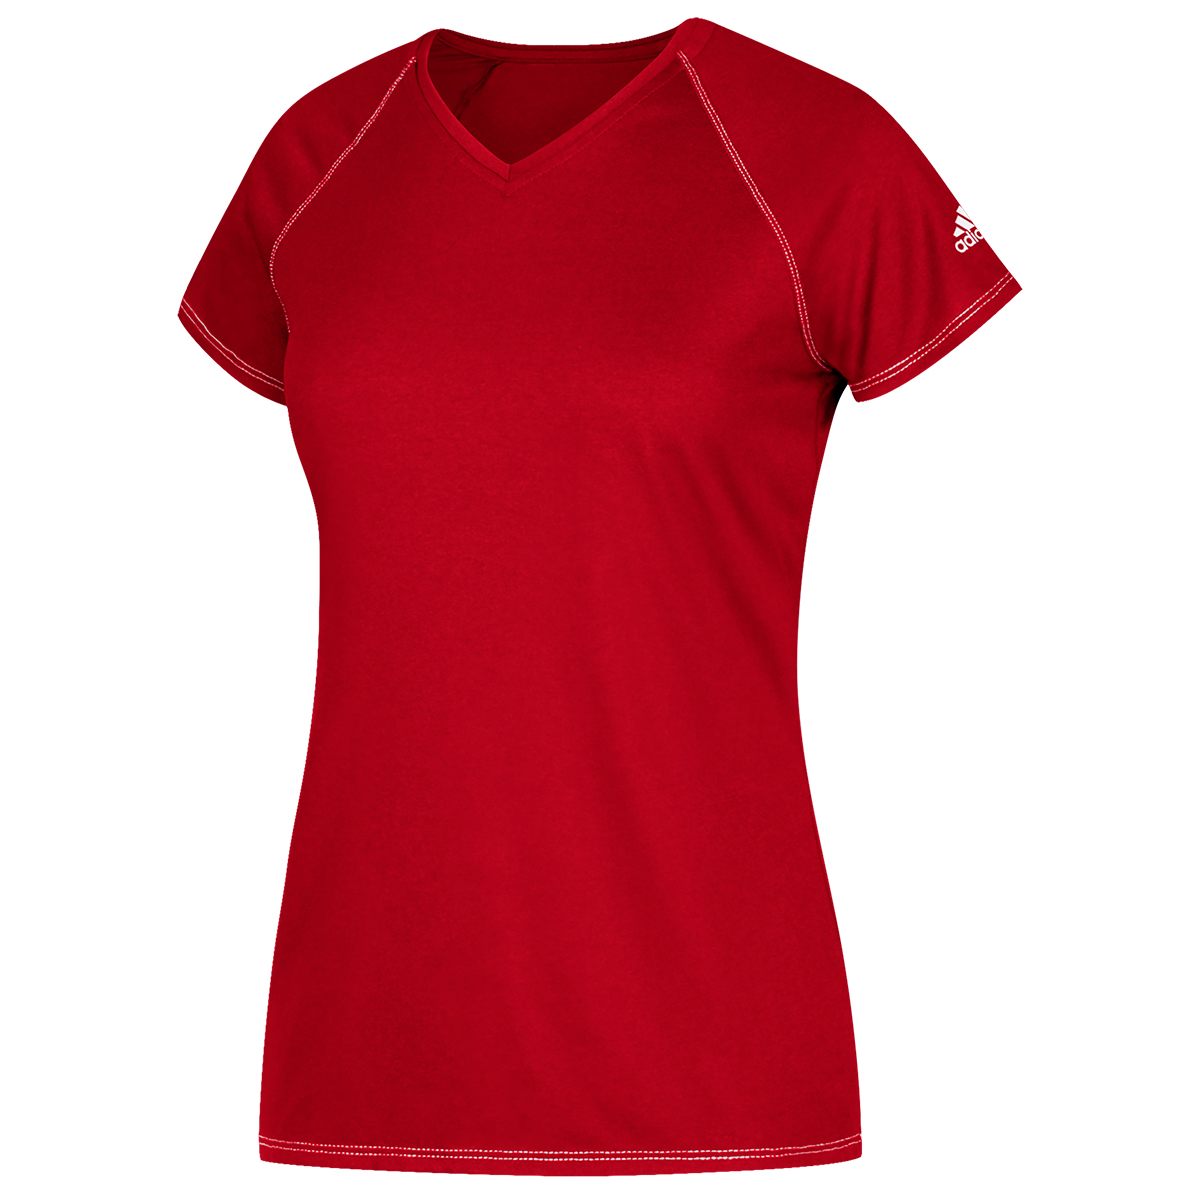 Adidas Women's Short-Sleeve Team Climalite Tee - Red, XXL